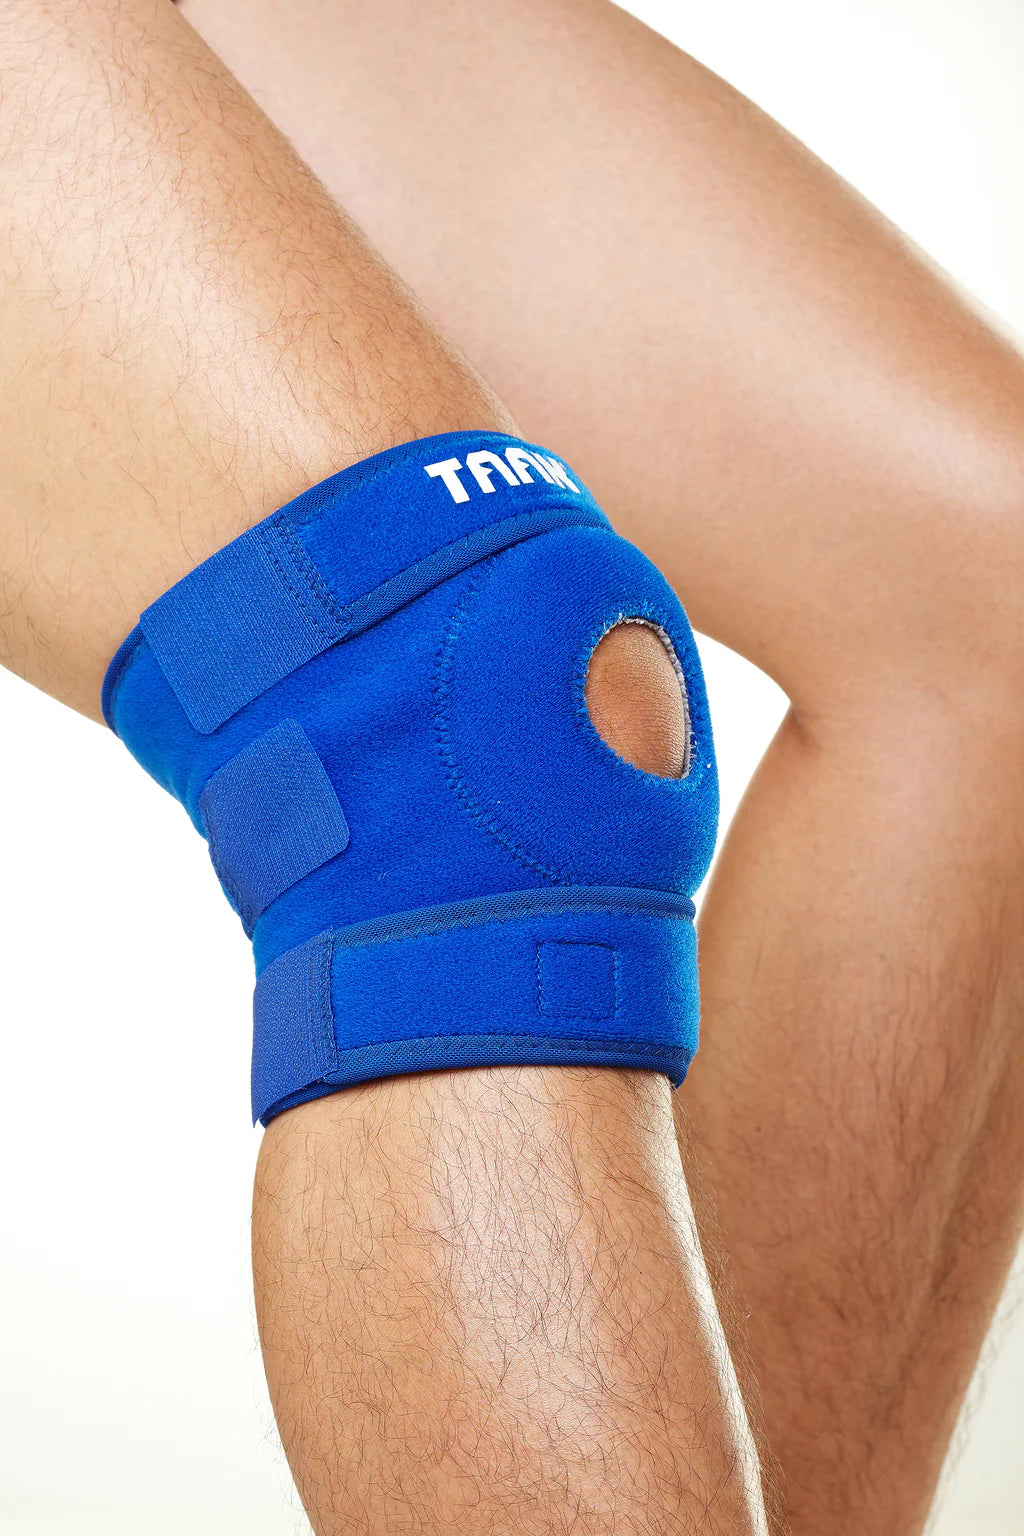 Taan Knee Belt- HJ-1102 (Blue)